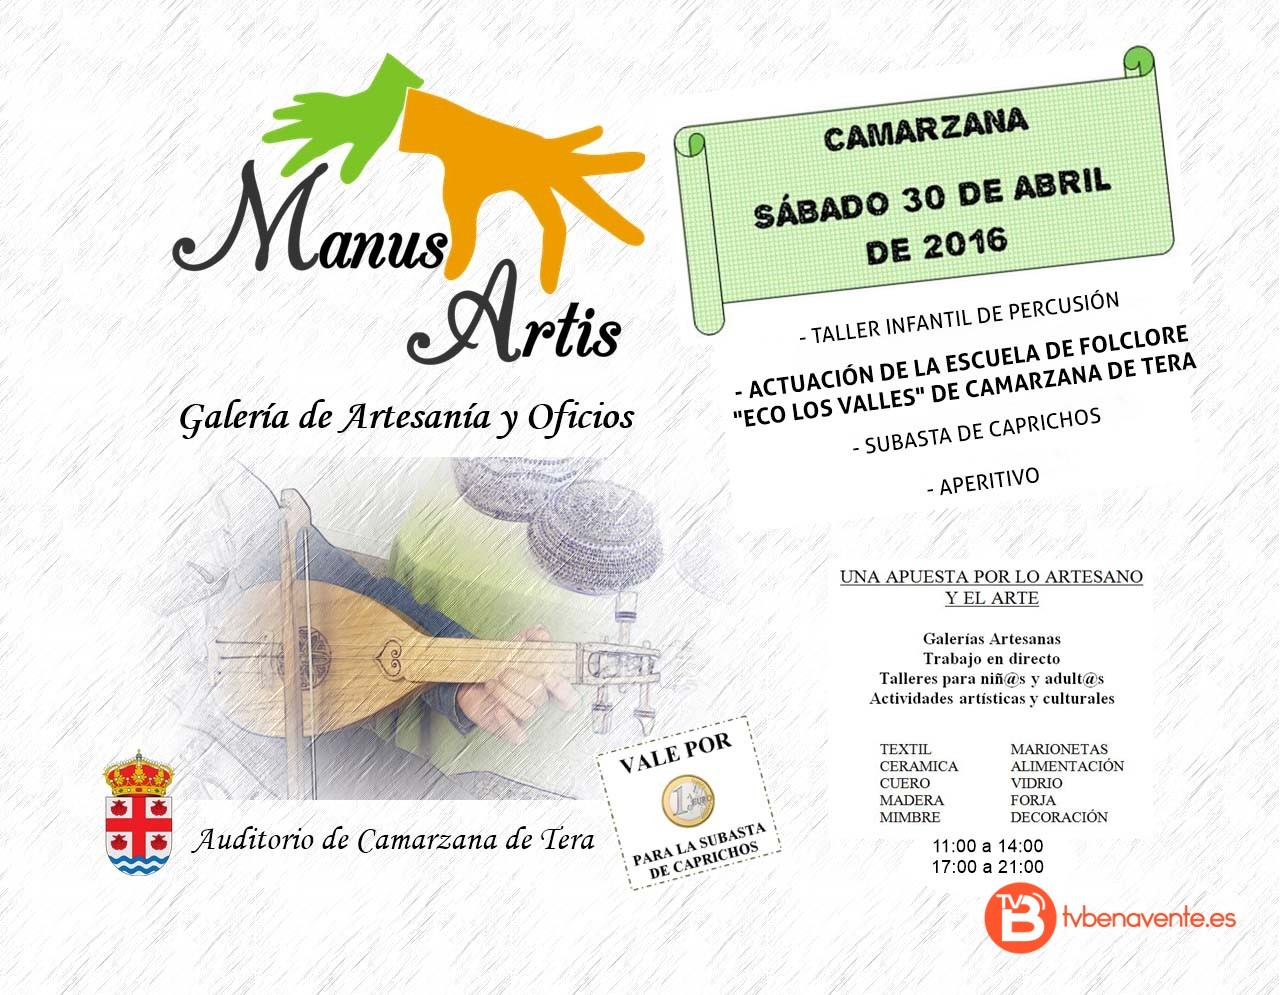 Cartel-musica-tradicional-camarzana de tera.manus artis 2016